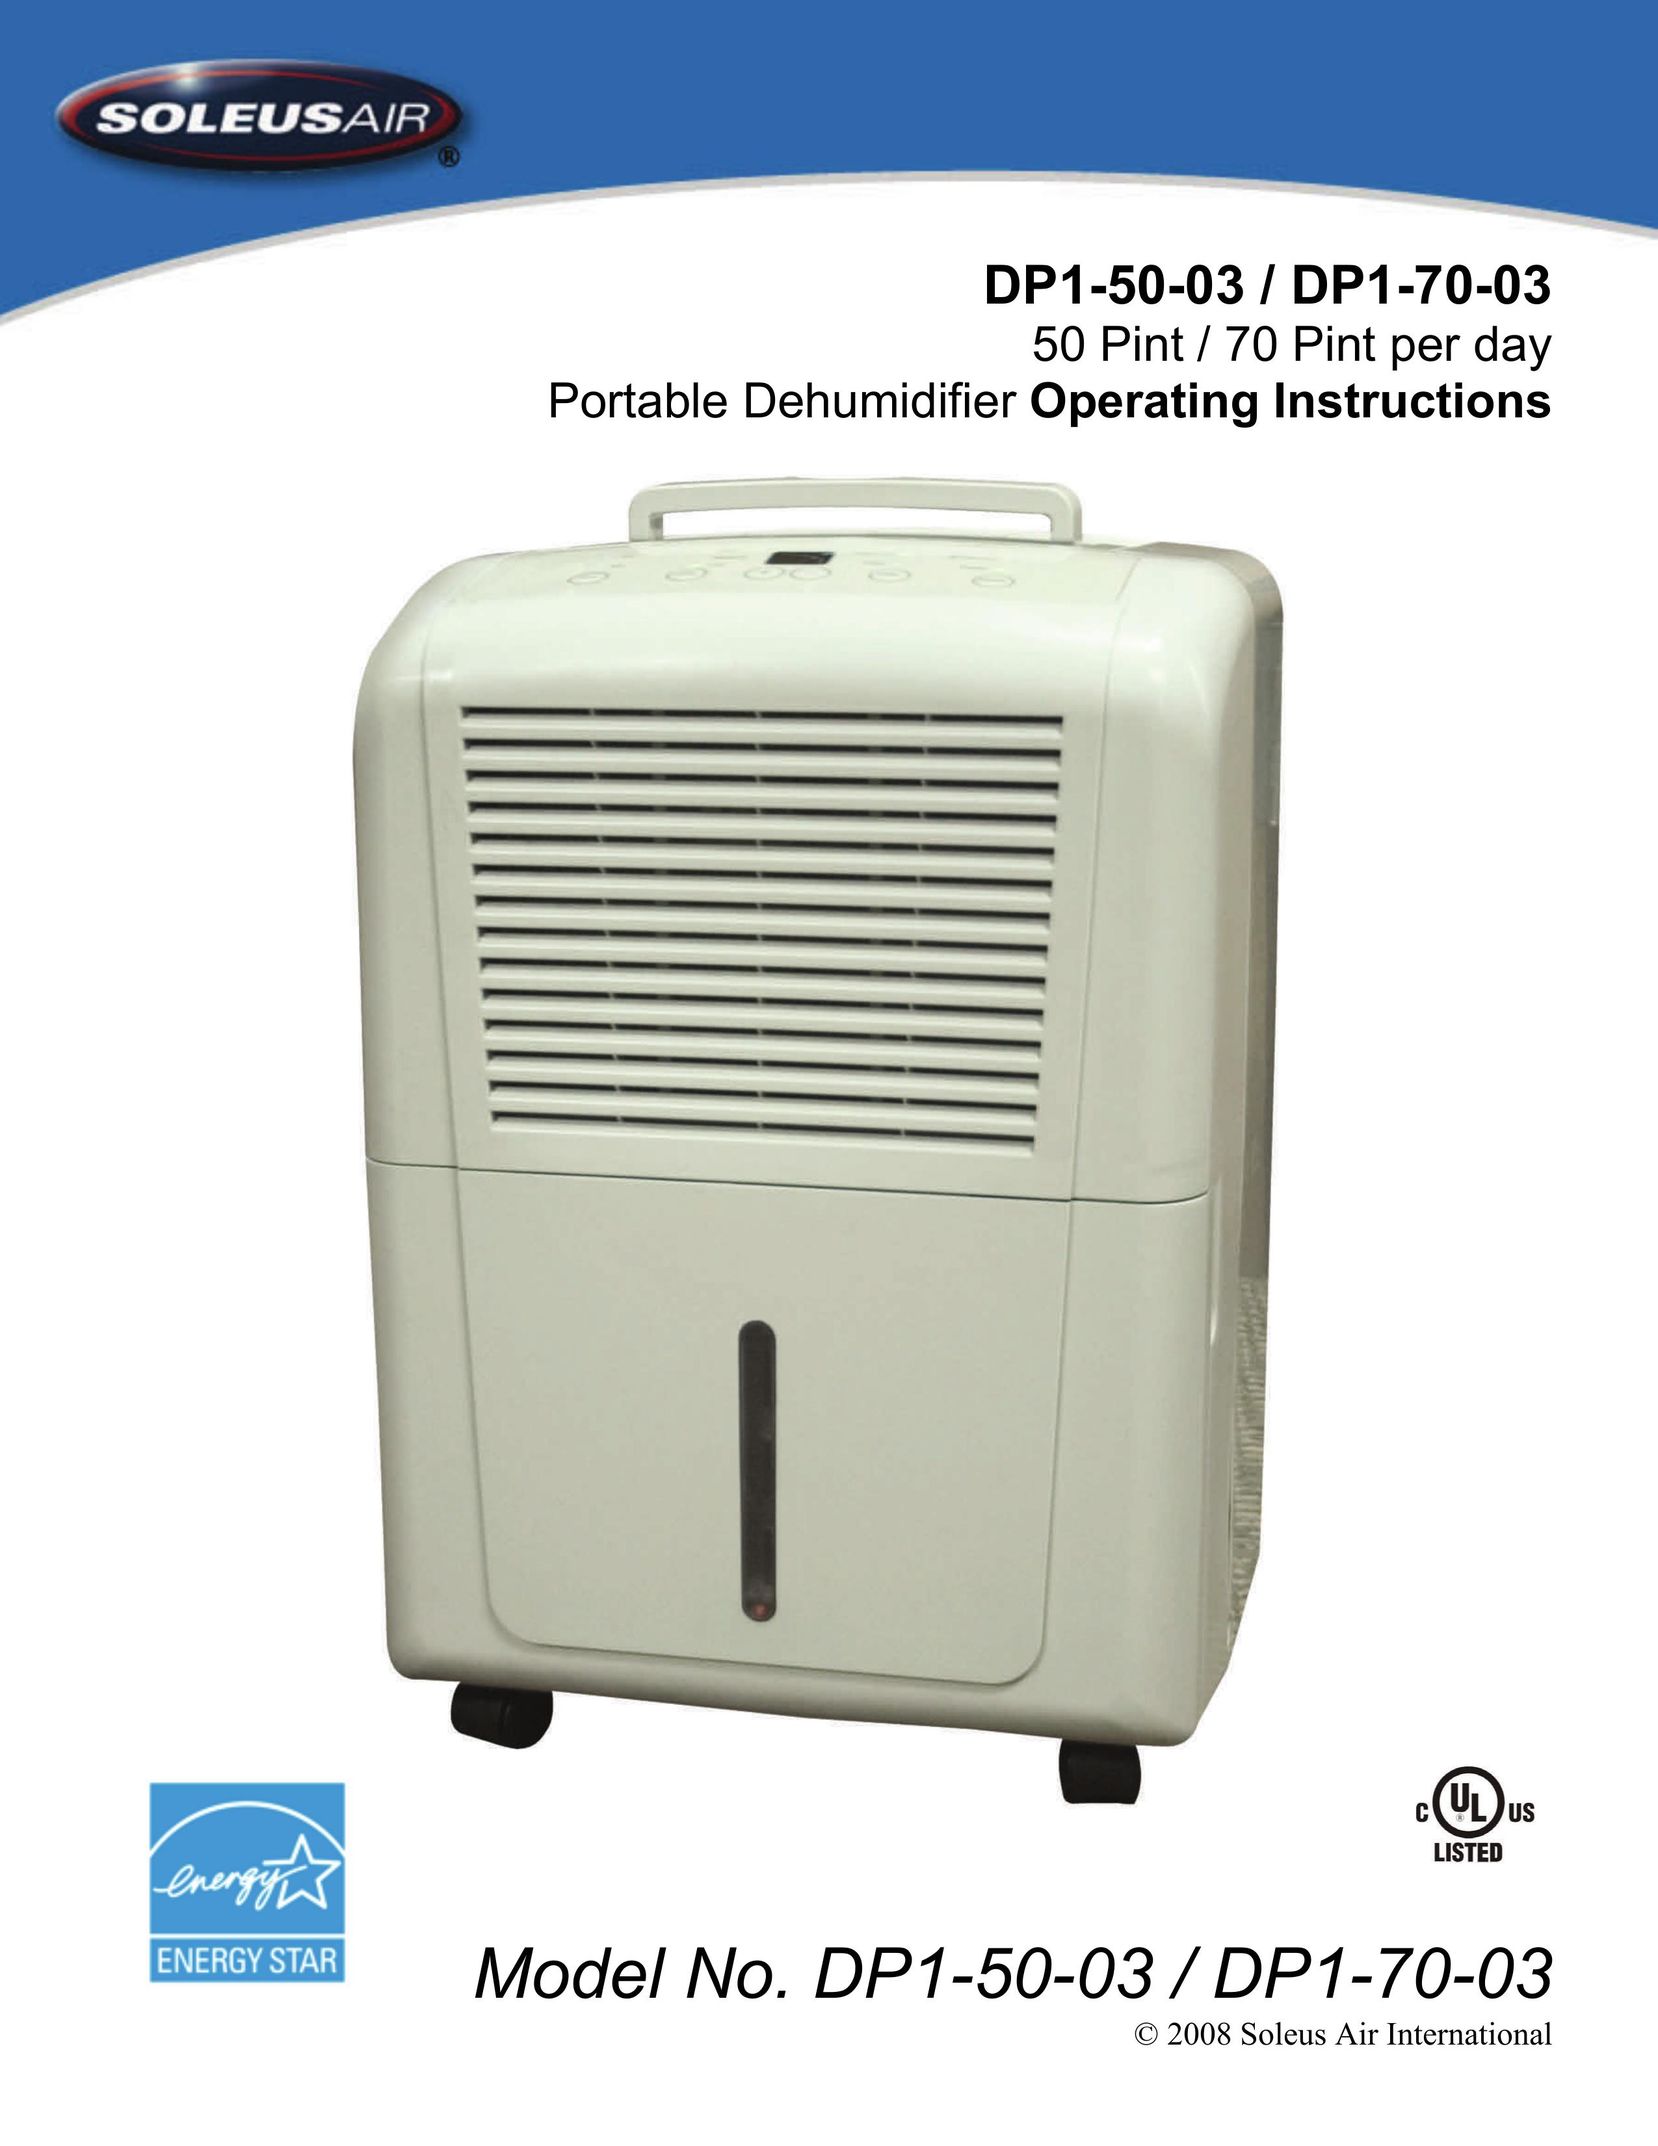 Soleus Air DP1-70-03 Dehumidifier User Manual